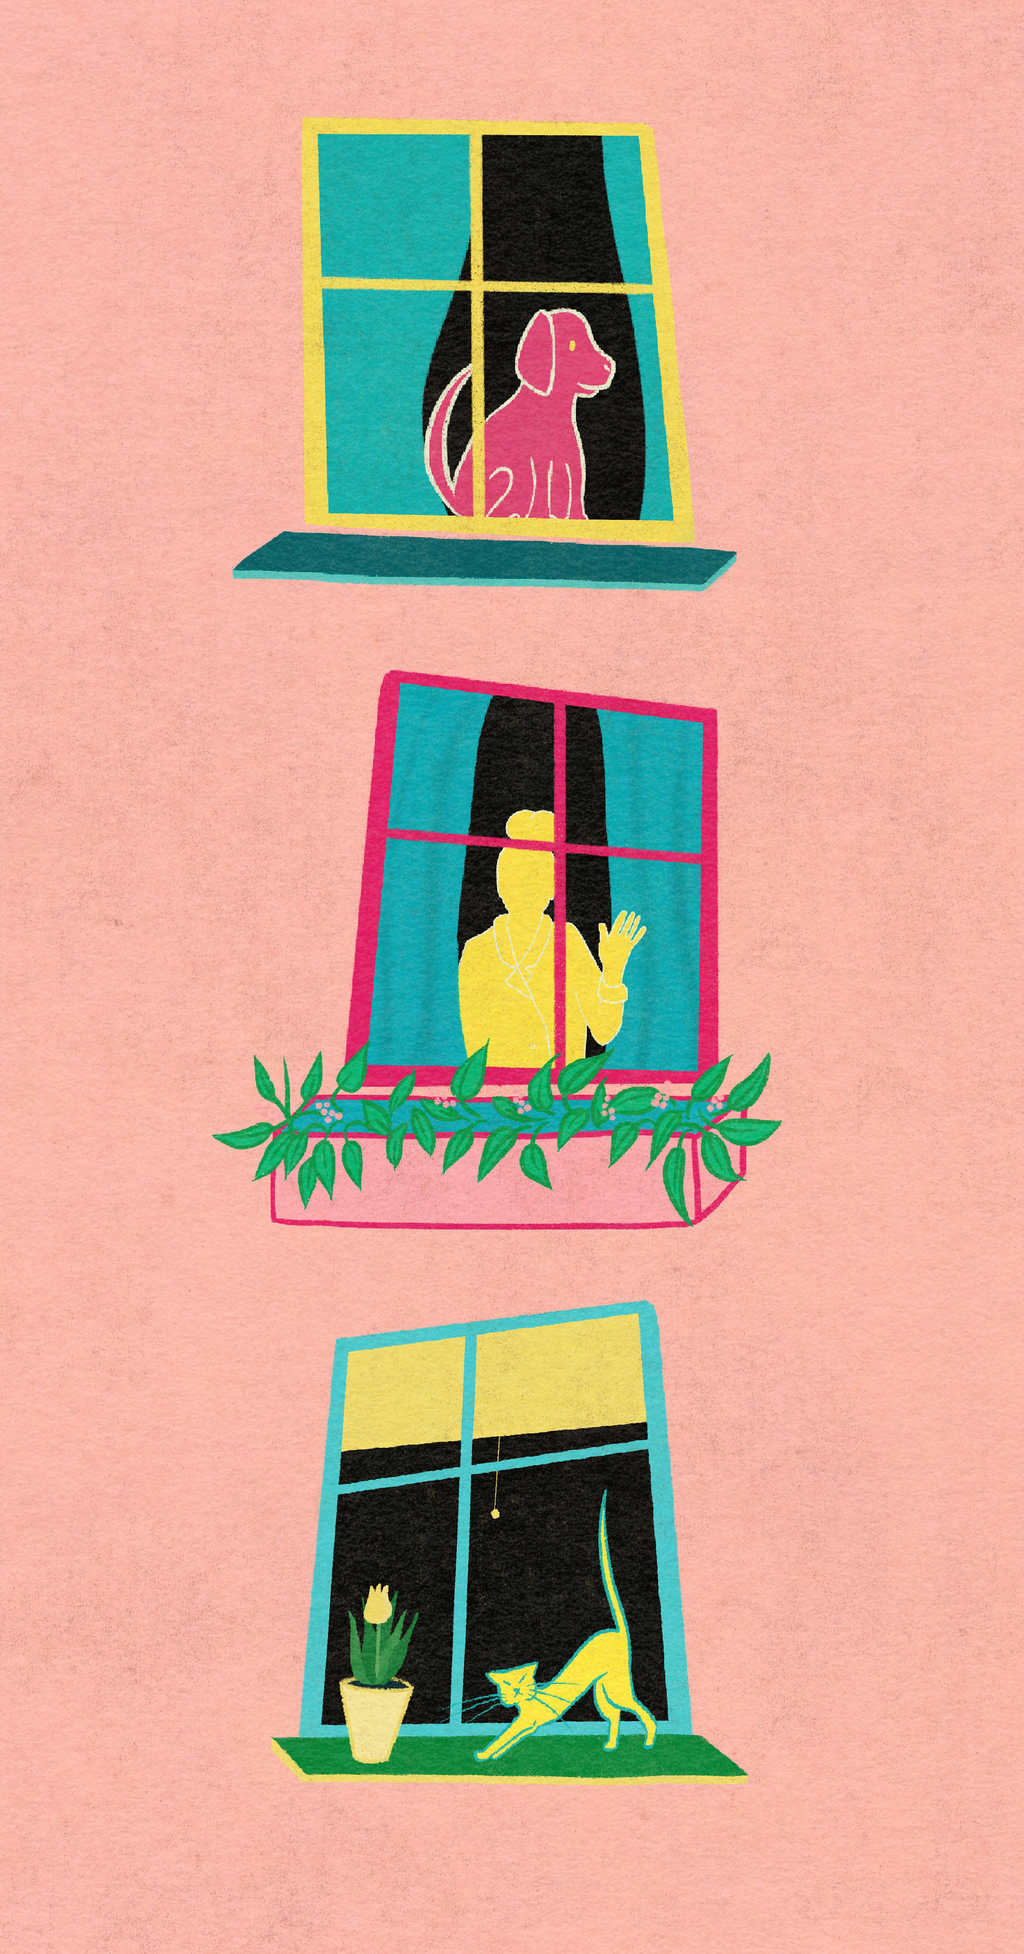 illustration of Three windows with neighbors illustration